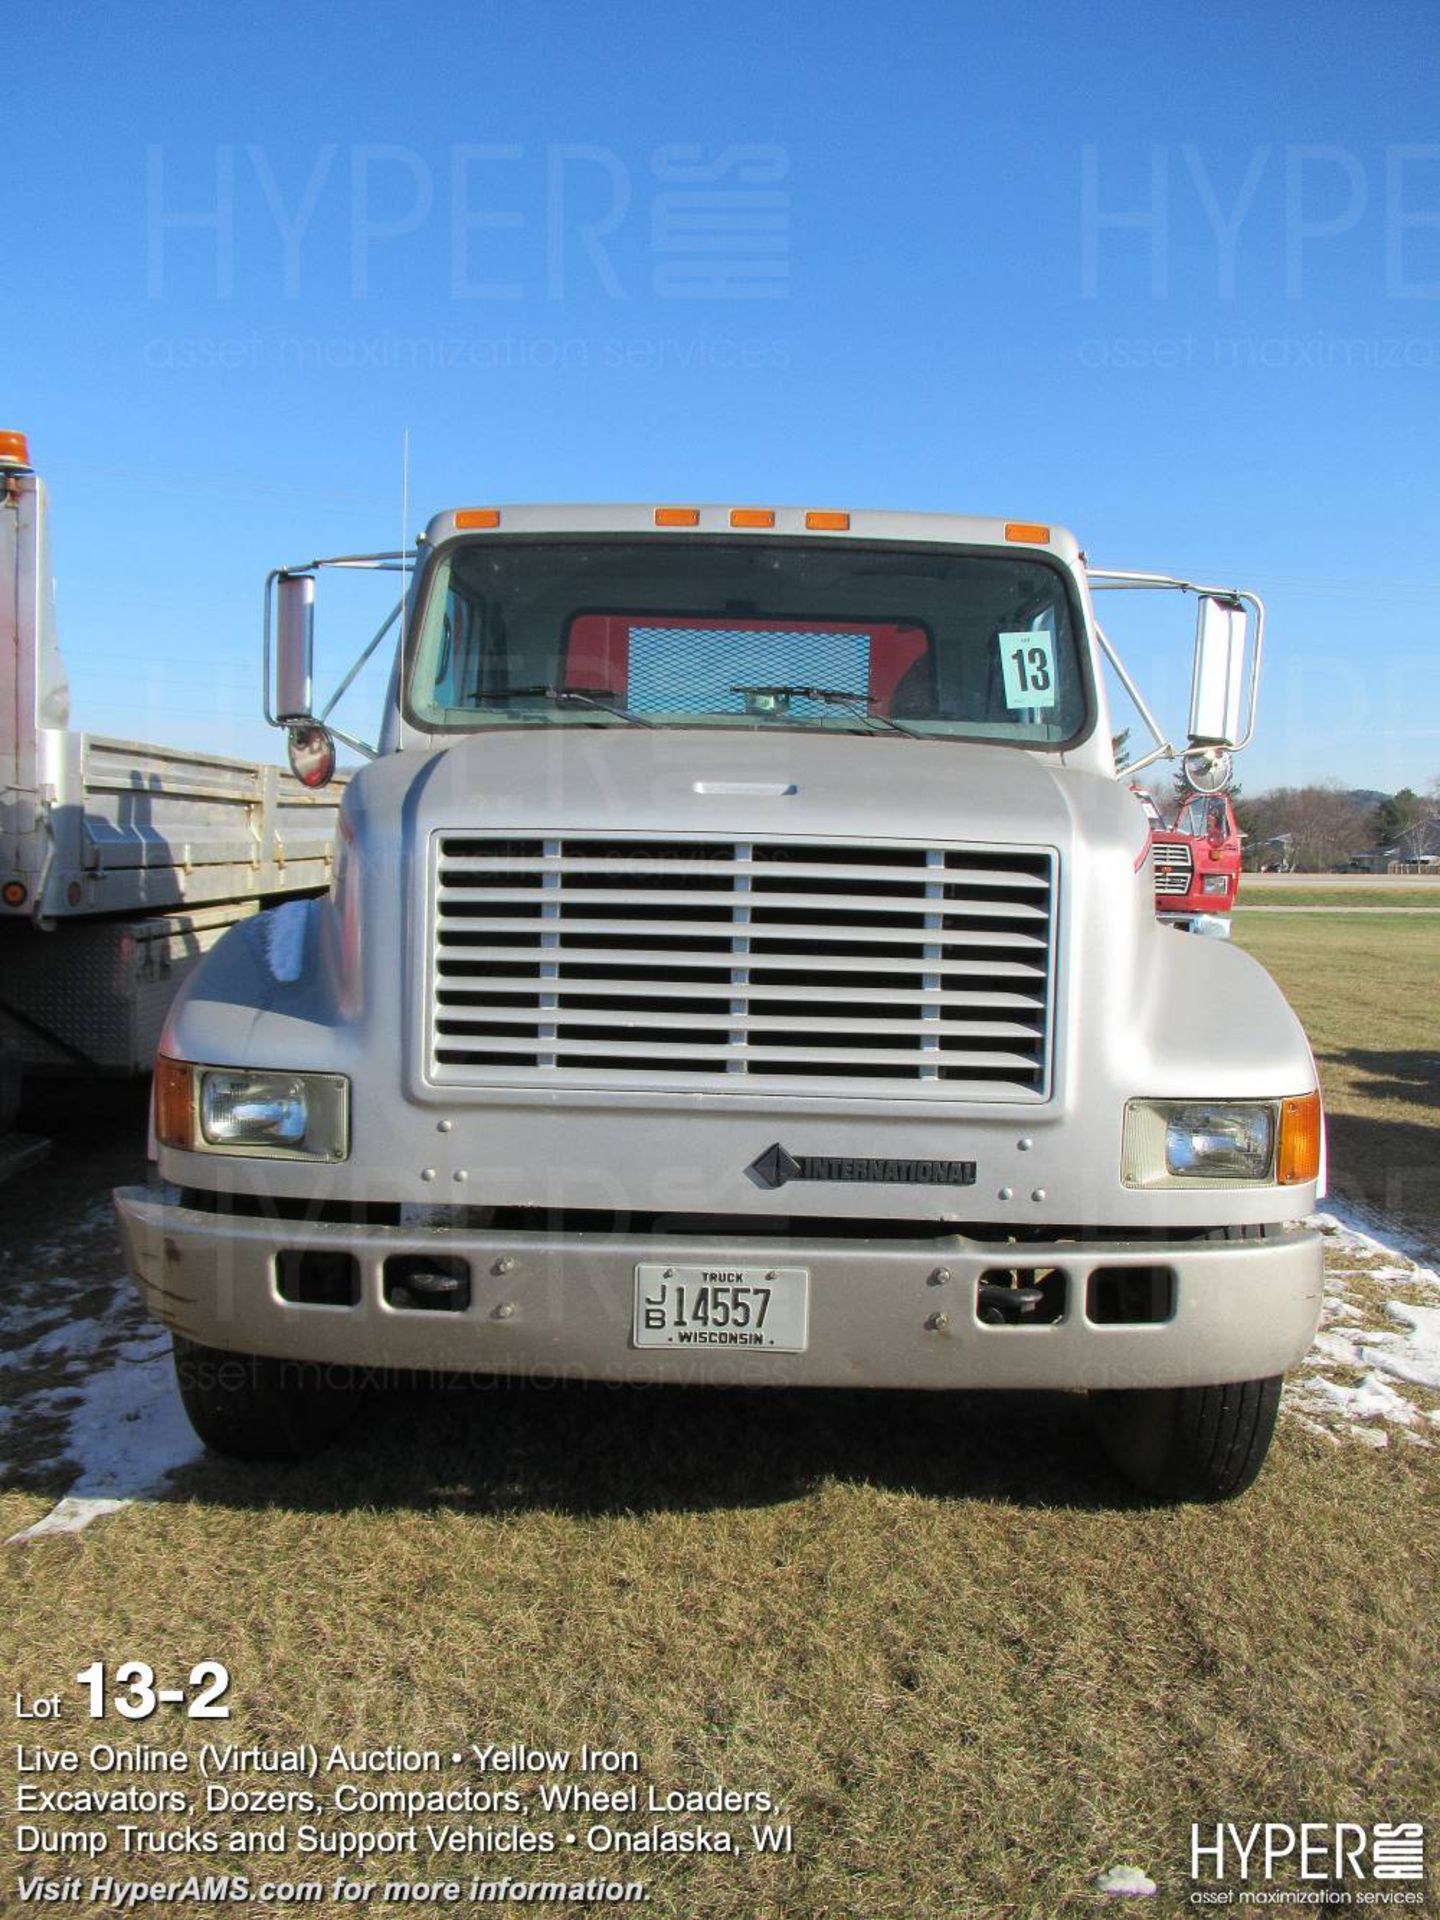 1999 International 4700 Dump Truck - Image 2 of 11